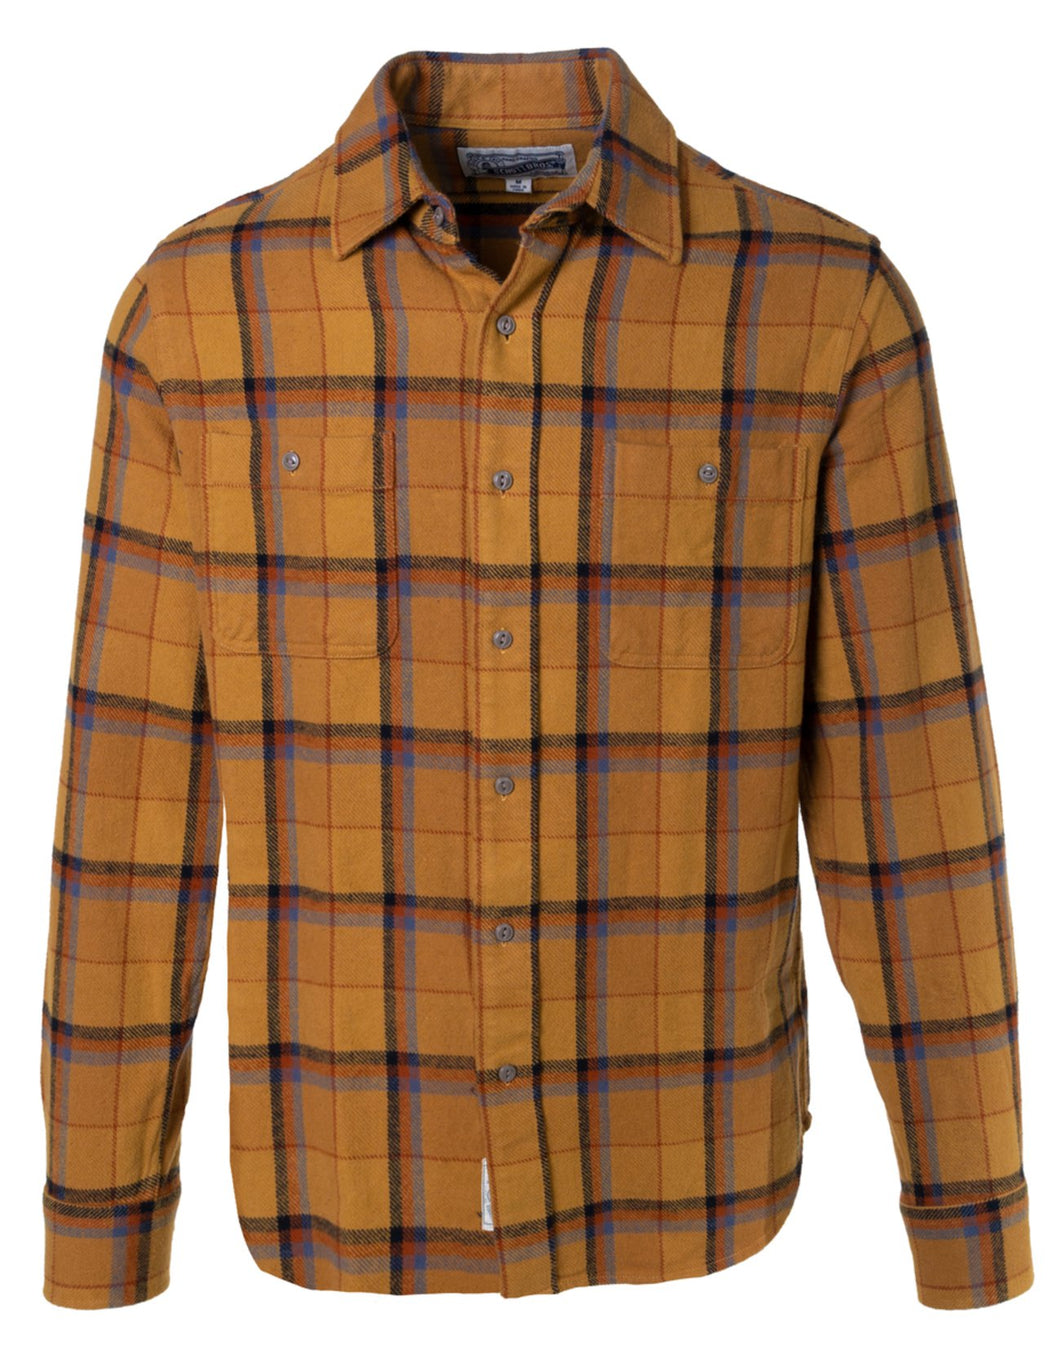 Schott N.Y.C - Plaid Cotton Flannel Shirt - Gold